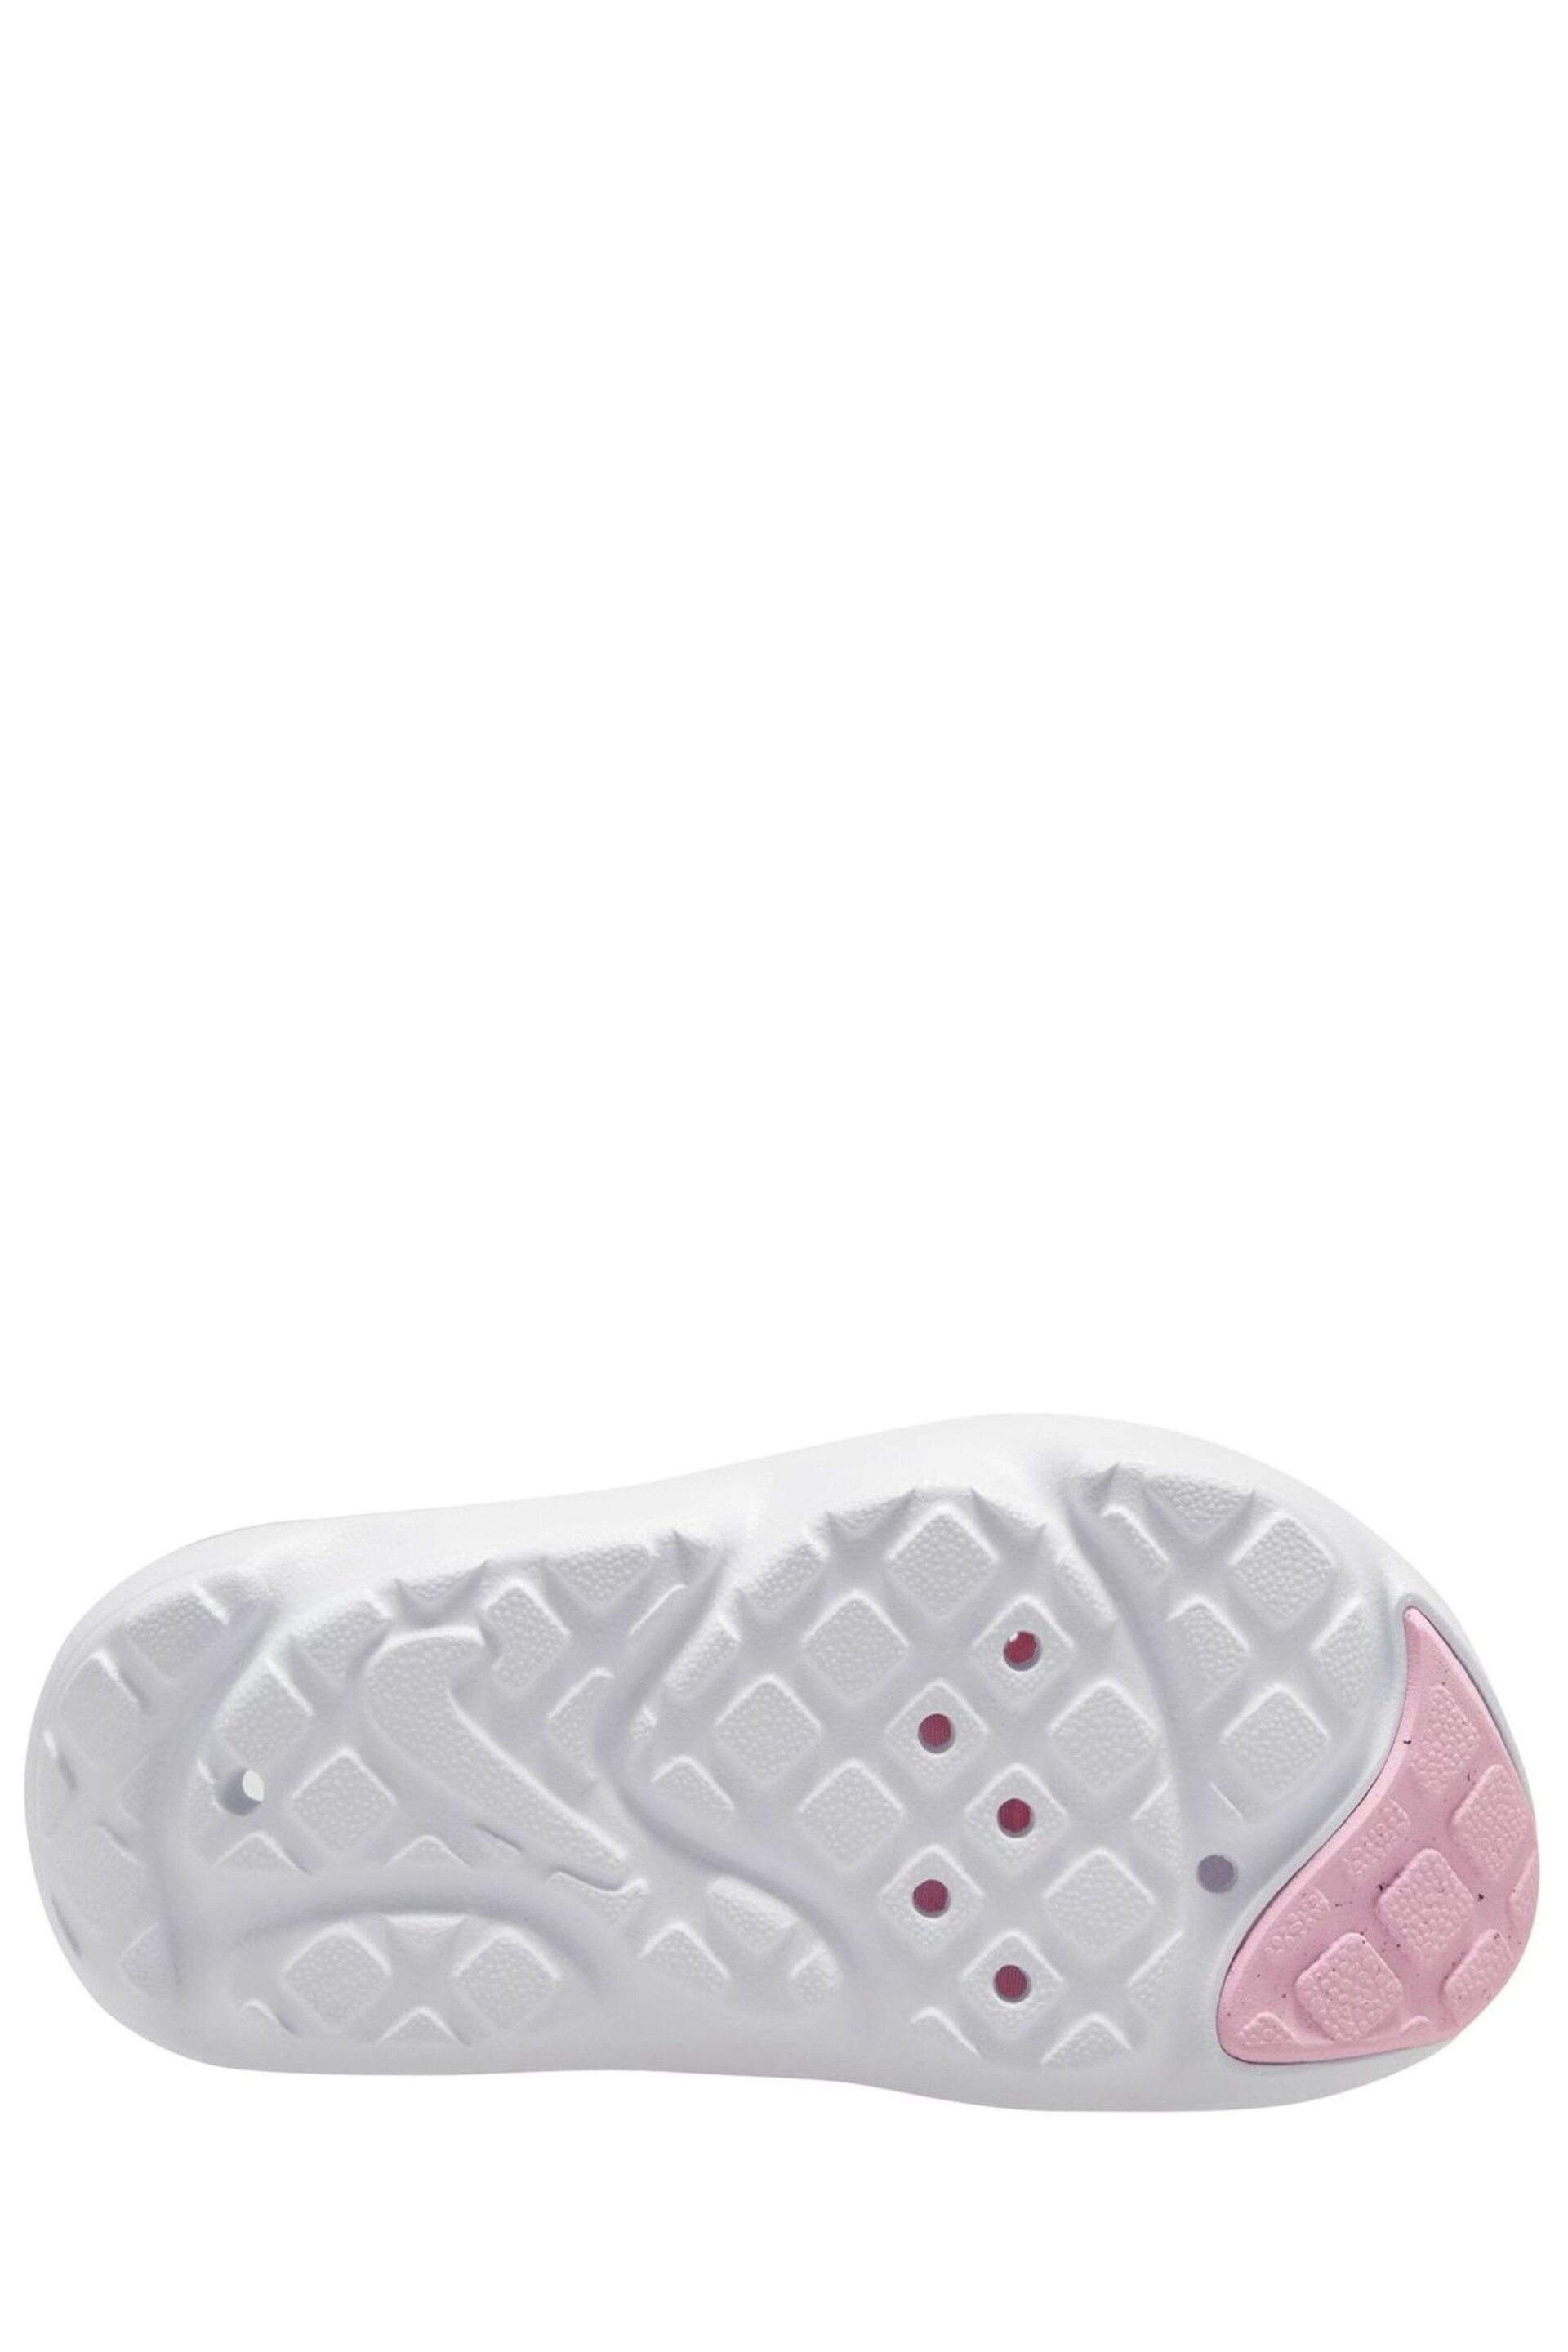 Nike Pink Sol Junior Pink Sandals - Image 4 of 4